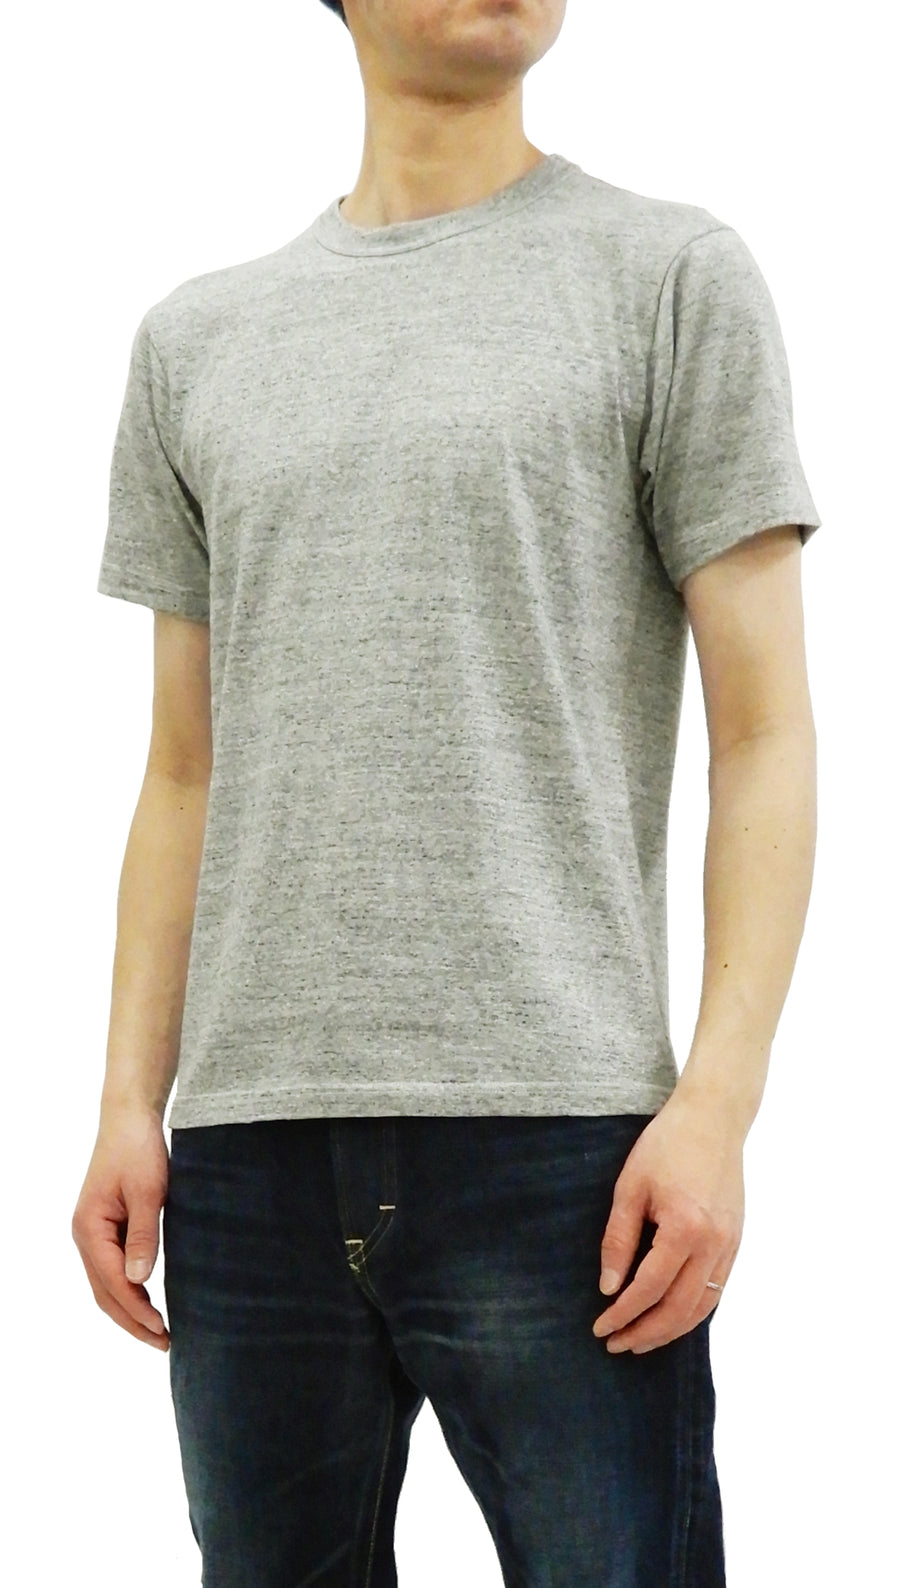 Whitesvill Men's 2-Pack Plain T-shirt Short Sleeve Tee Toyo 